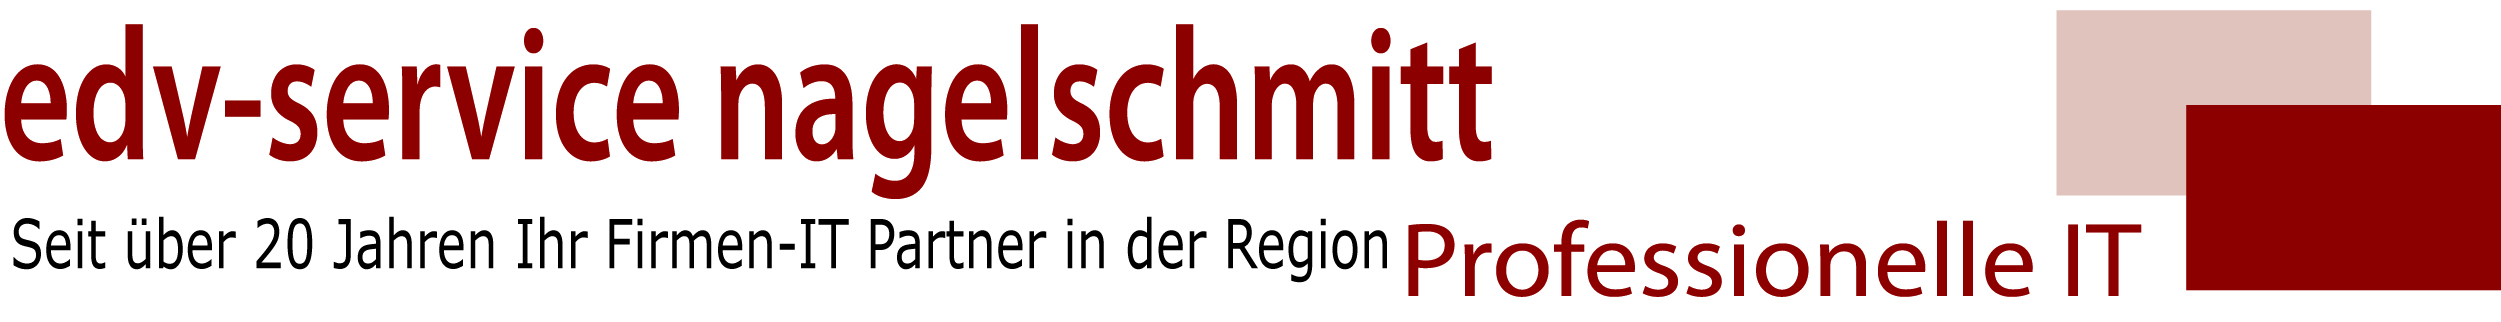 Logo EDV-Service Nagelschmitt, Professionelle IT